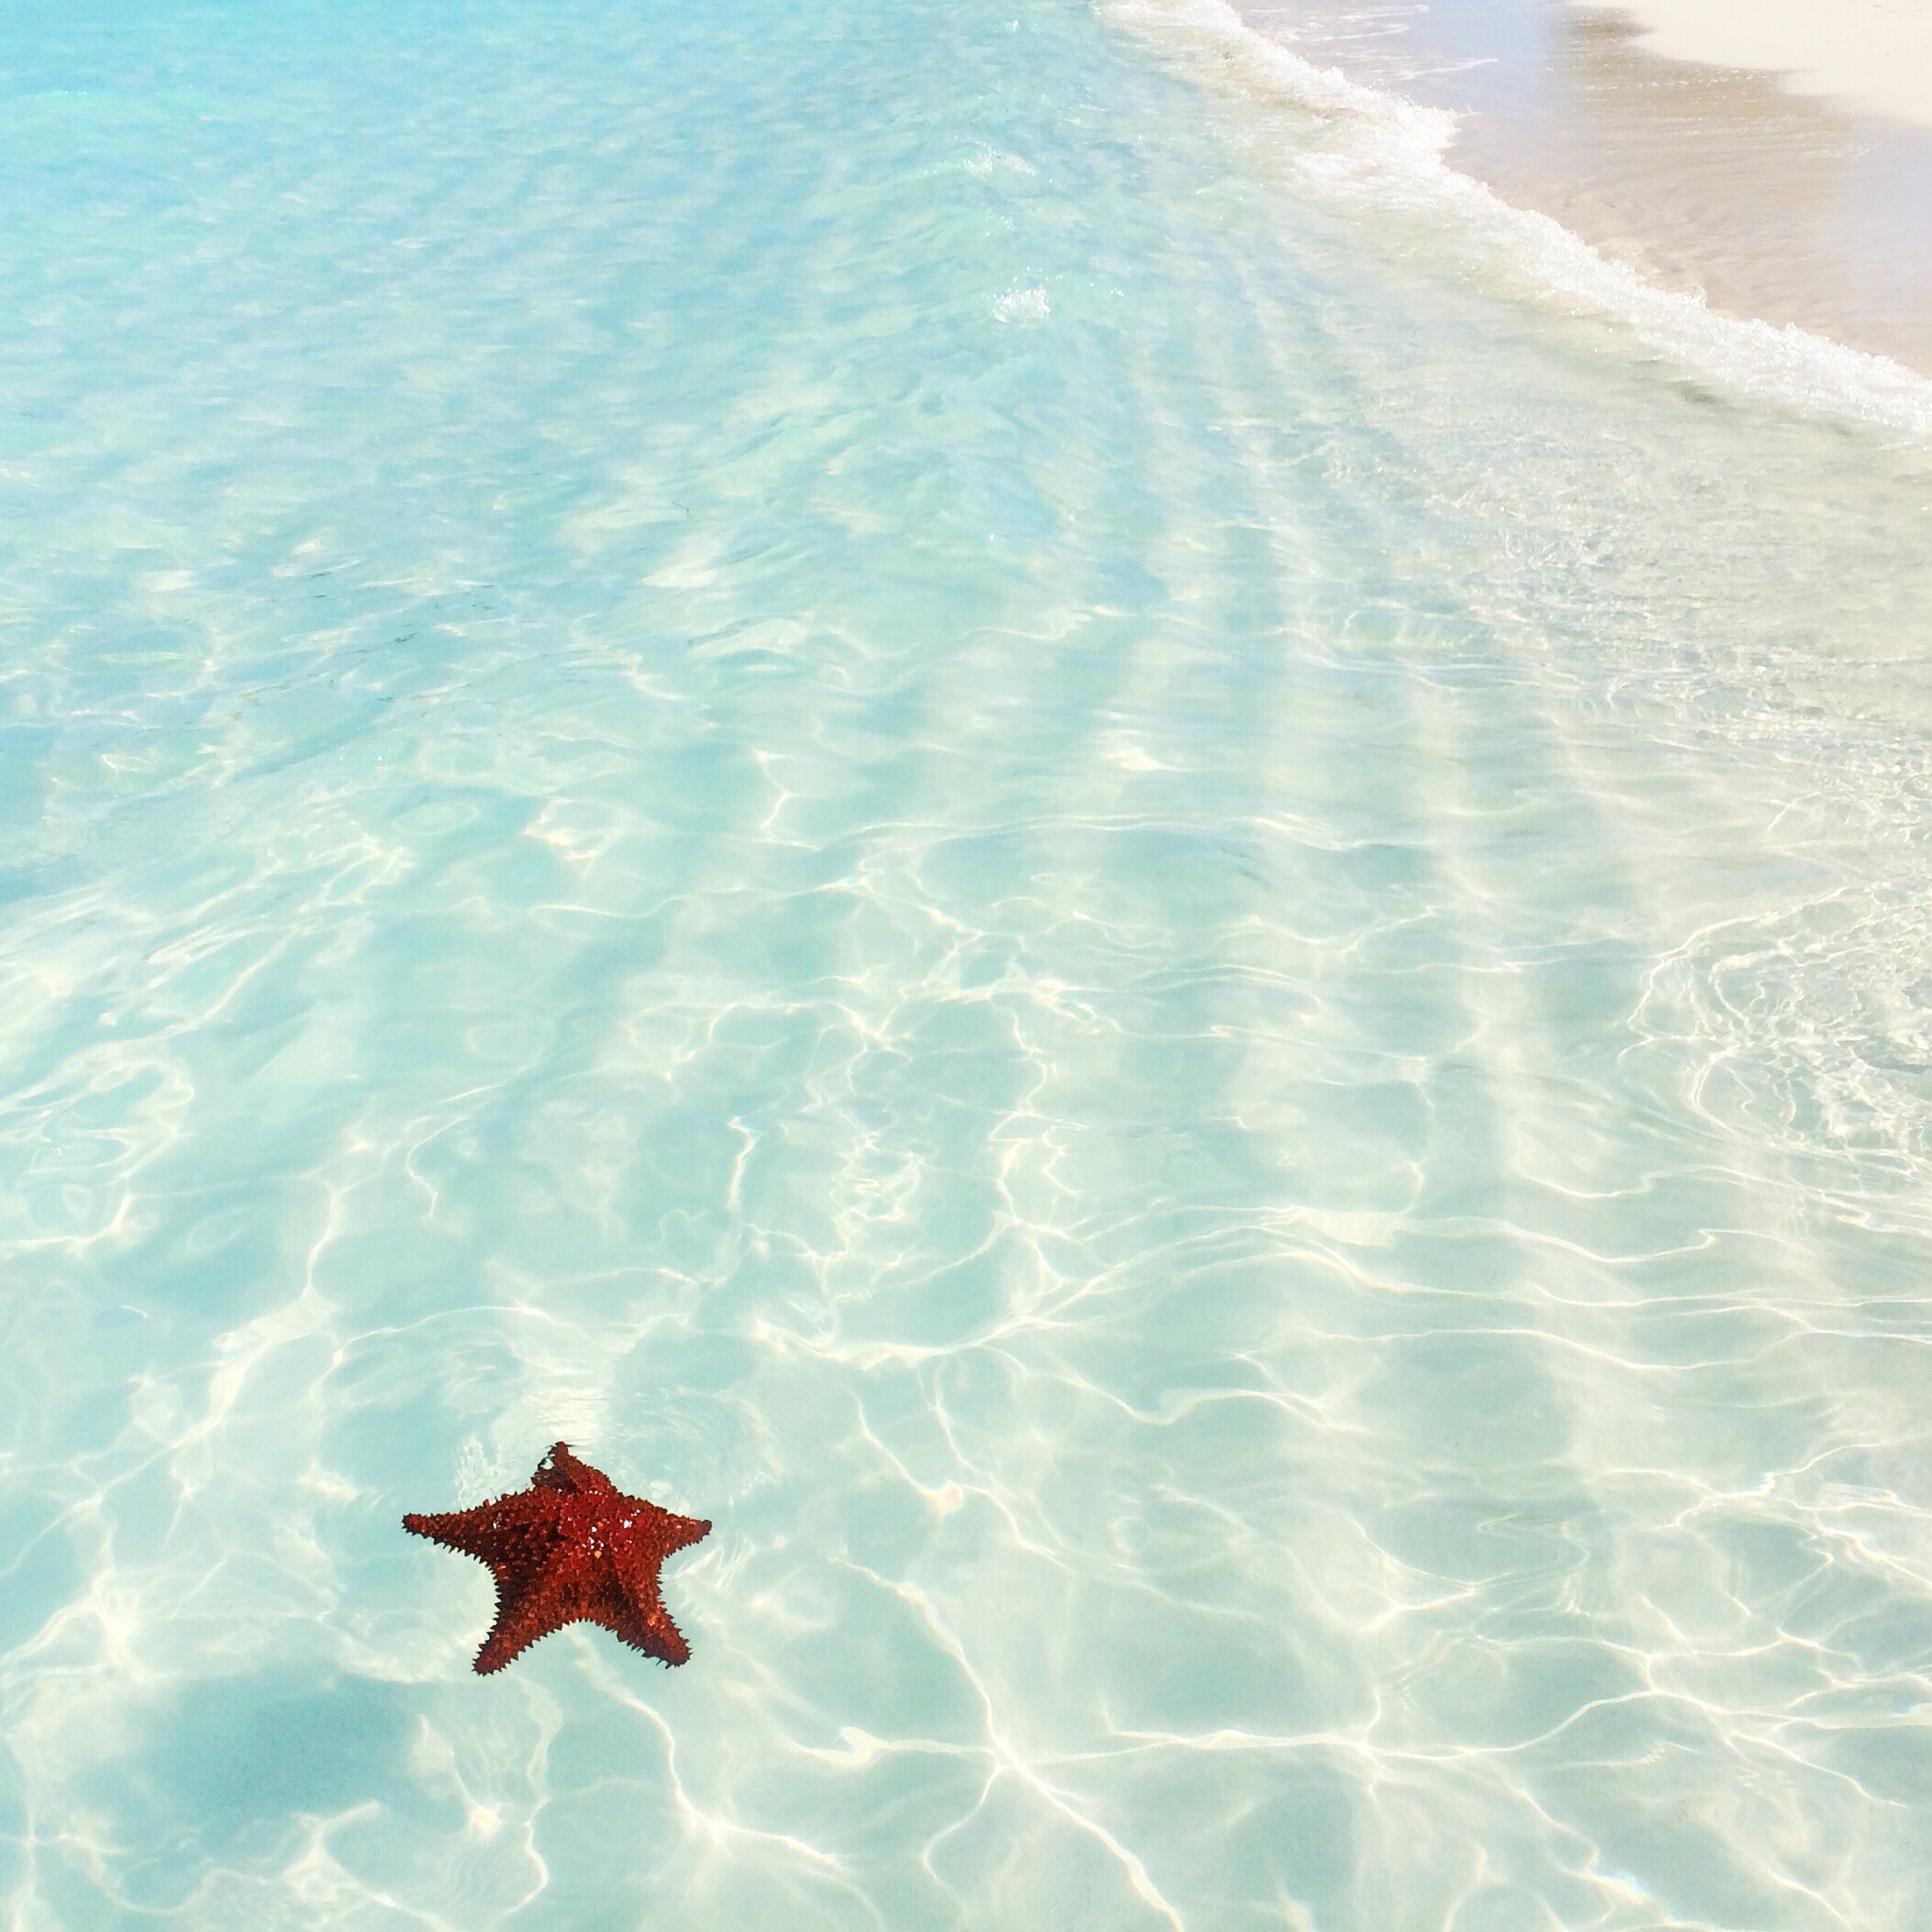 Starfish | Perfect Beach Photo | Traveling to The Exumas, Bahamas | Guide to Exumas, Bahamas | elanaloo.com